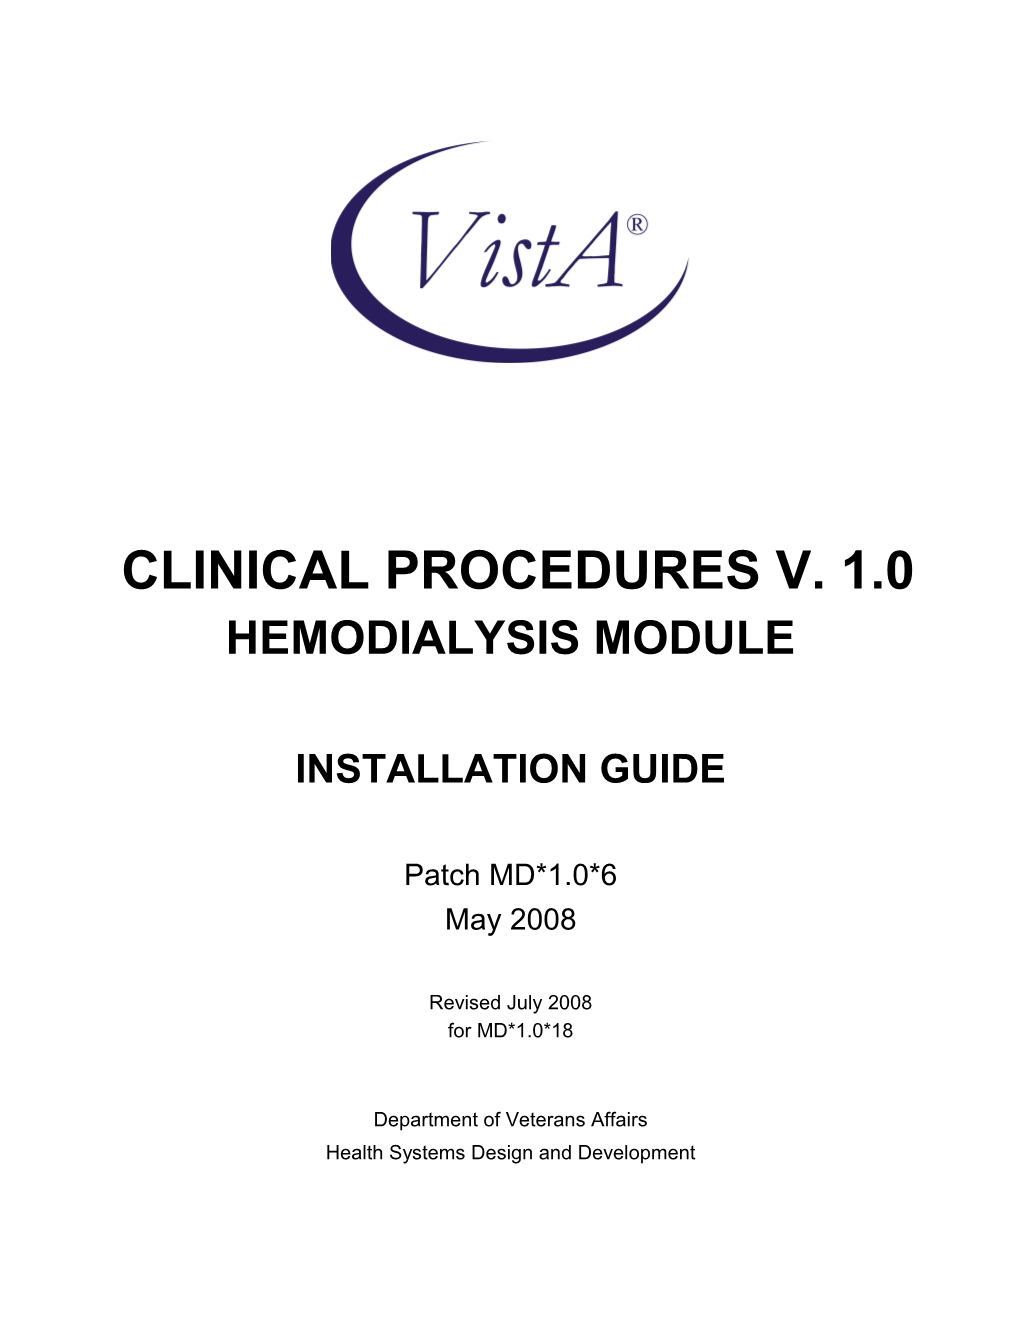 Hemodialysis V. 1.0 Installation Guide